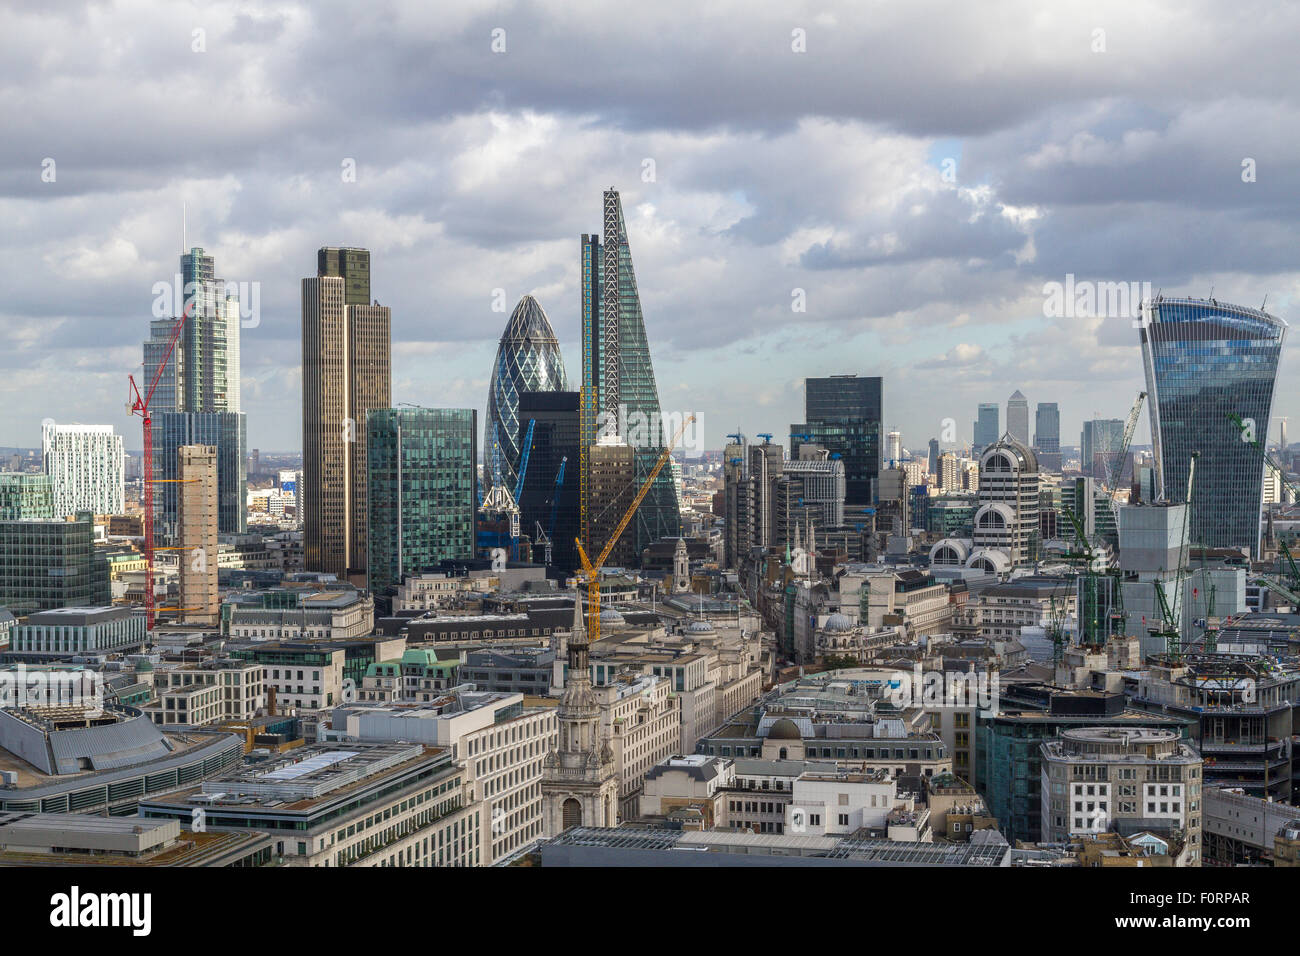 The City Of London skyline, London, UK Stock Photo